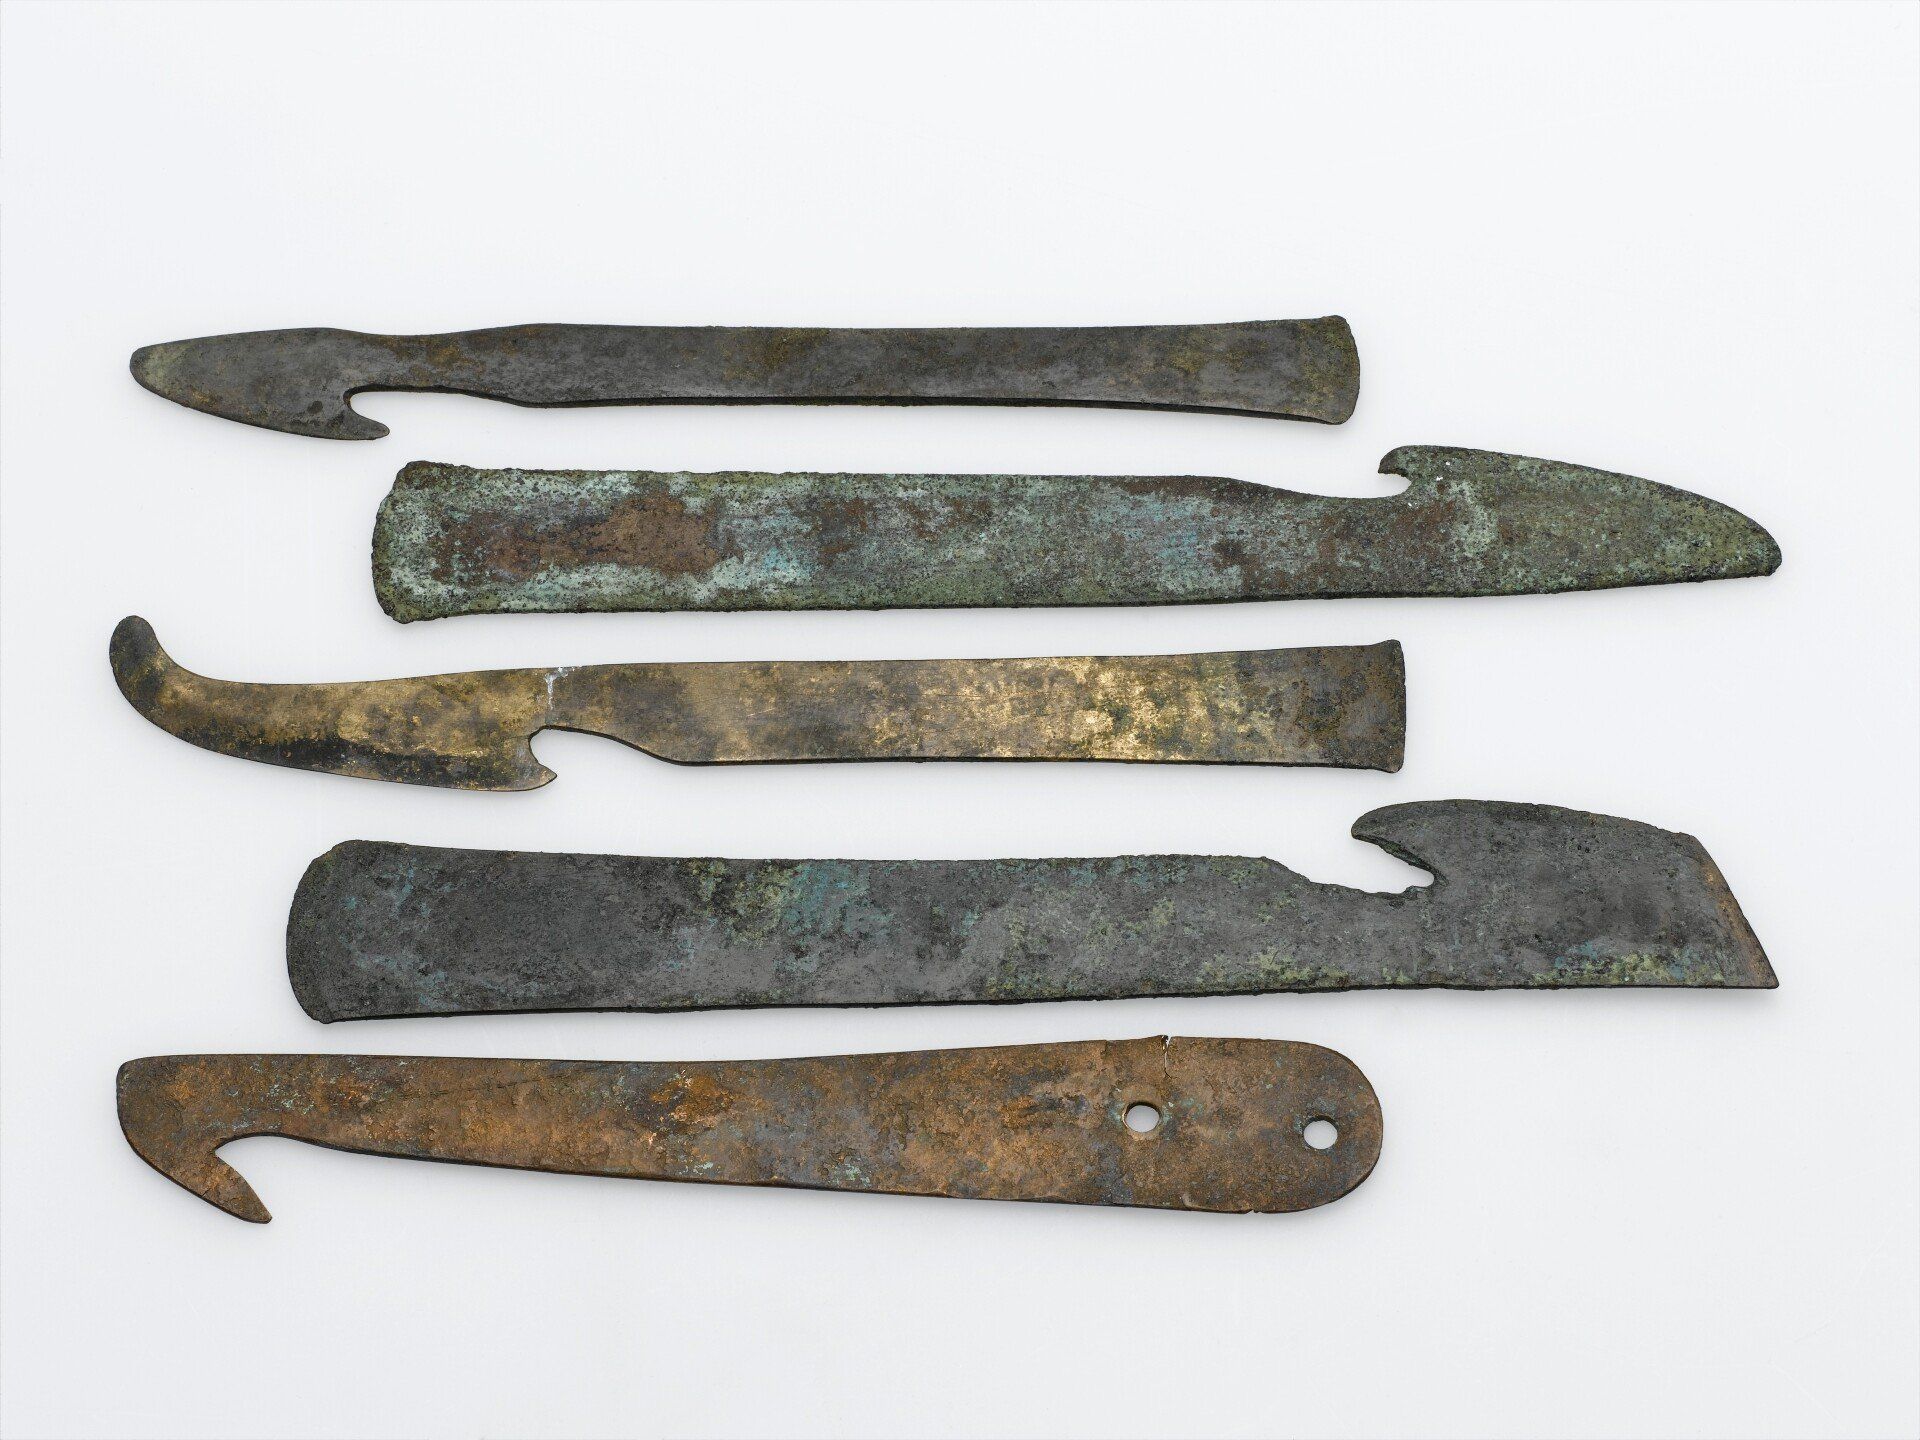 Original mummification tools made of bronze